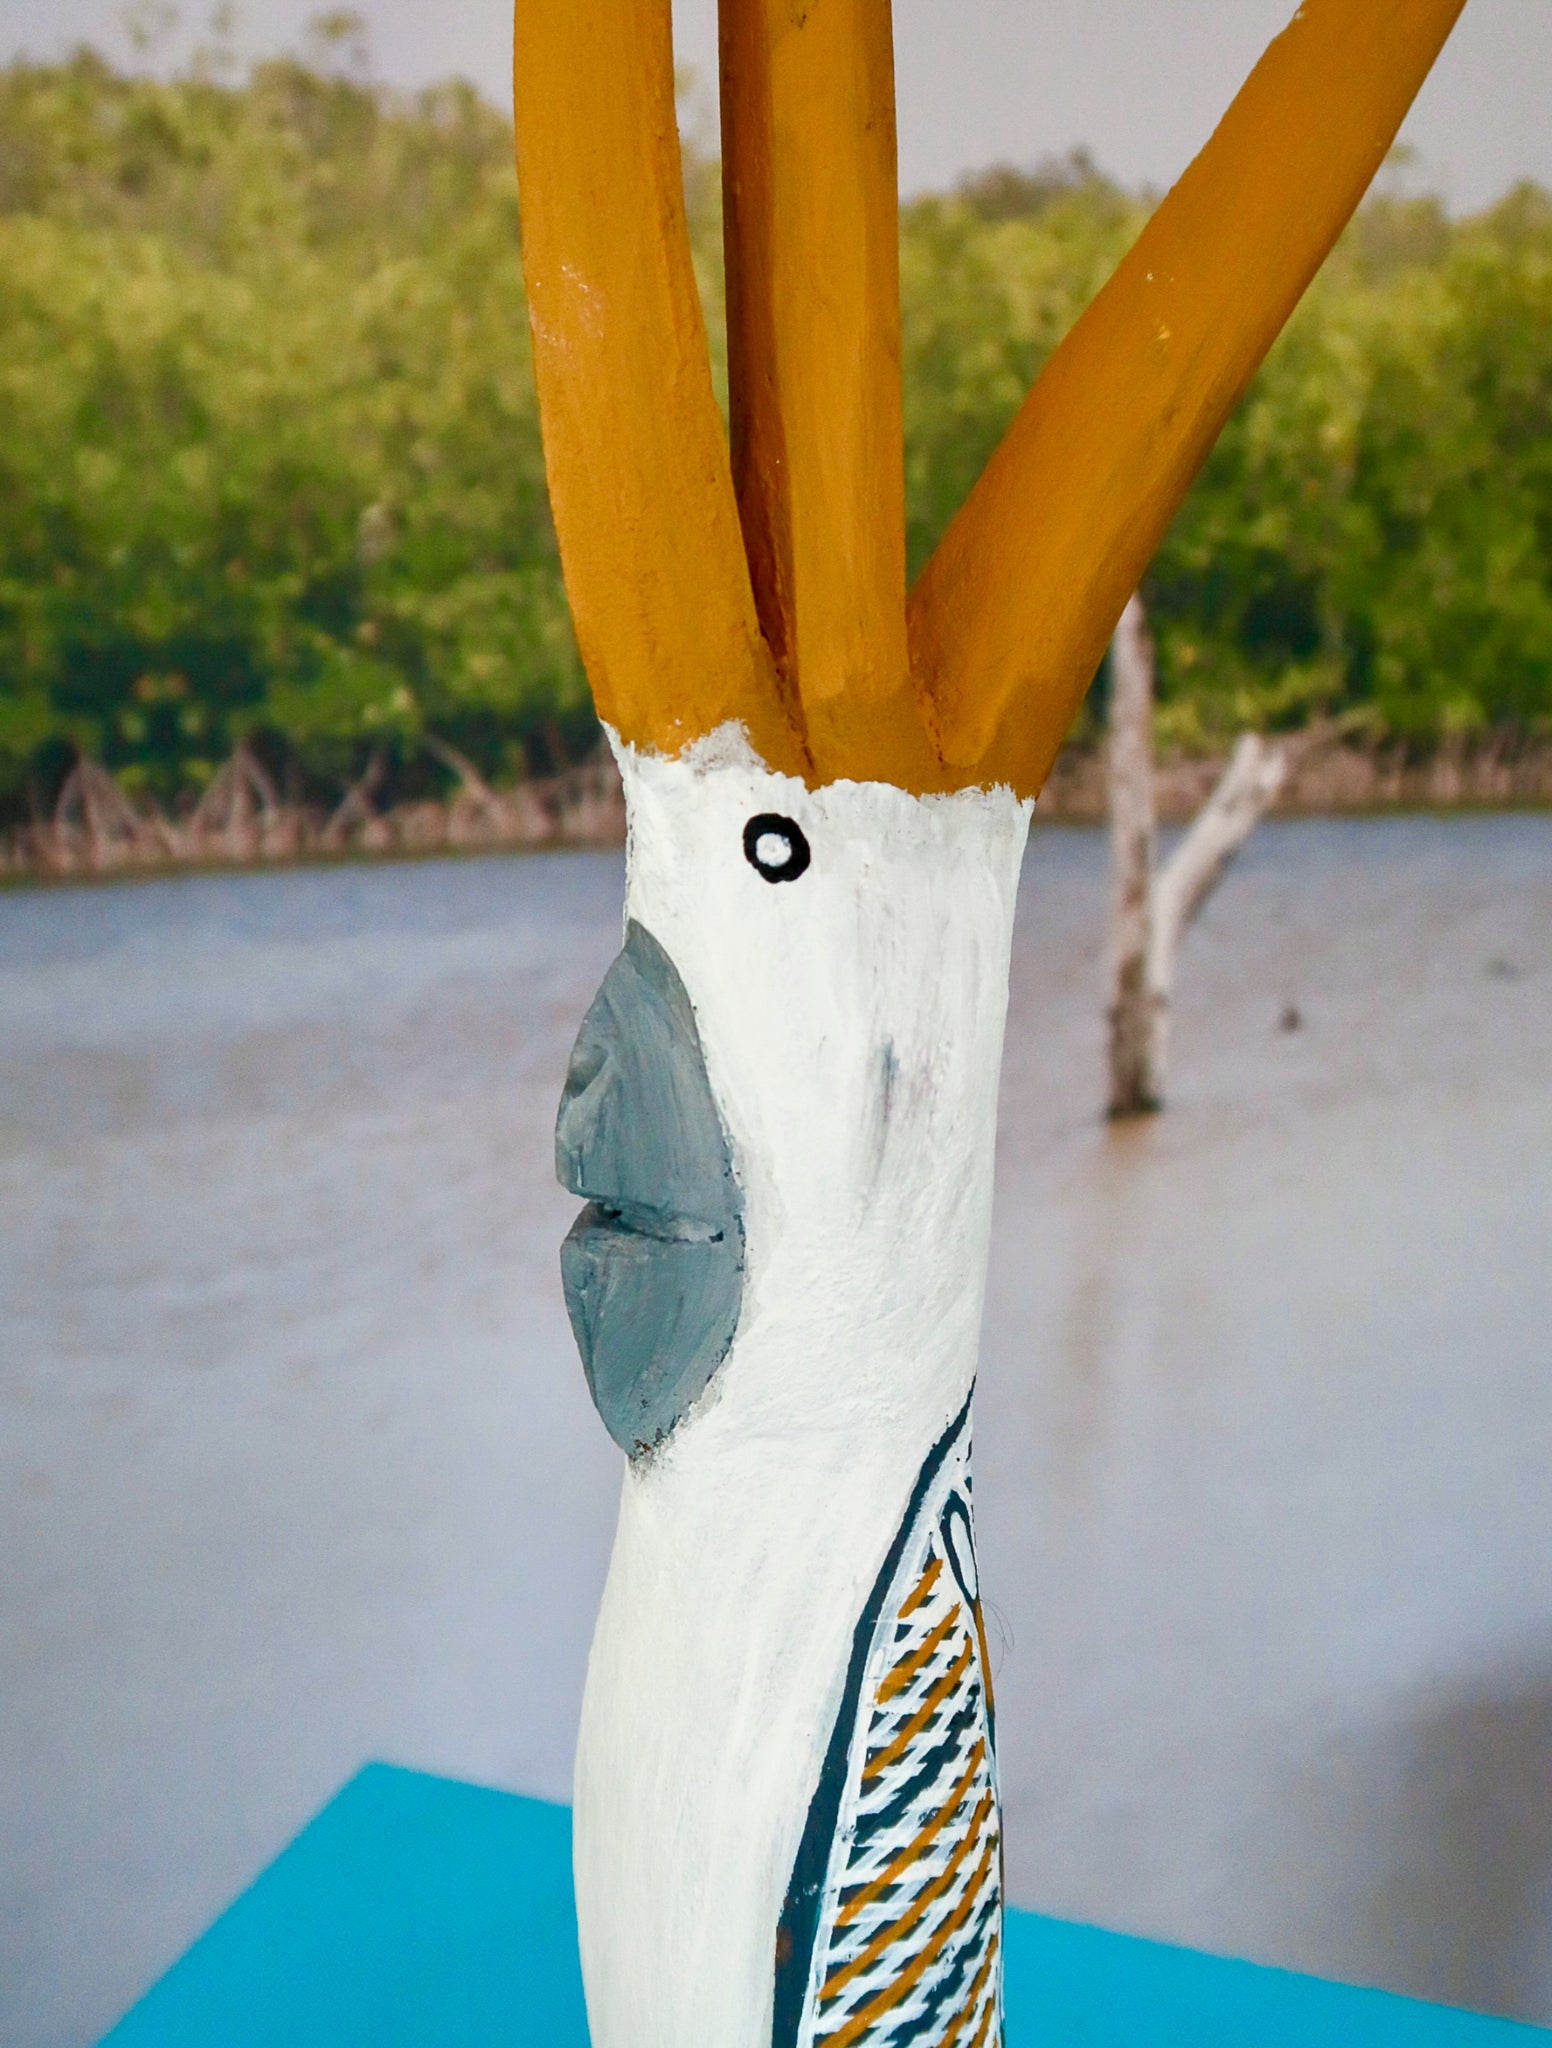 12. Ngarradj (Sulphur Crested Cockatoo)